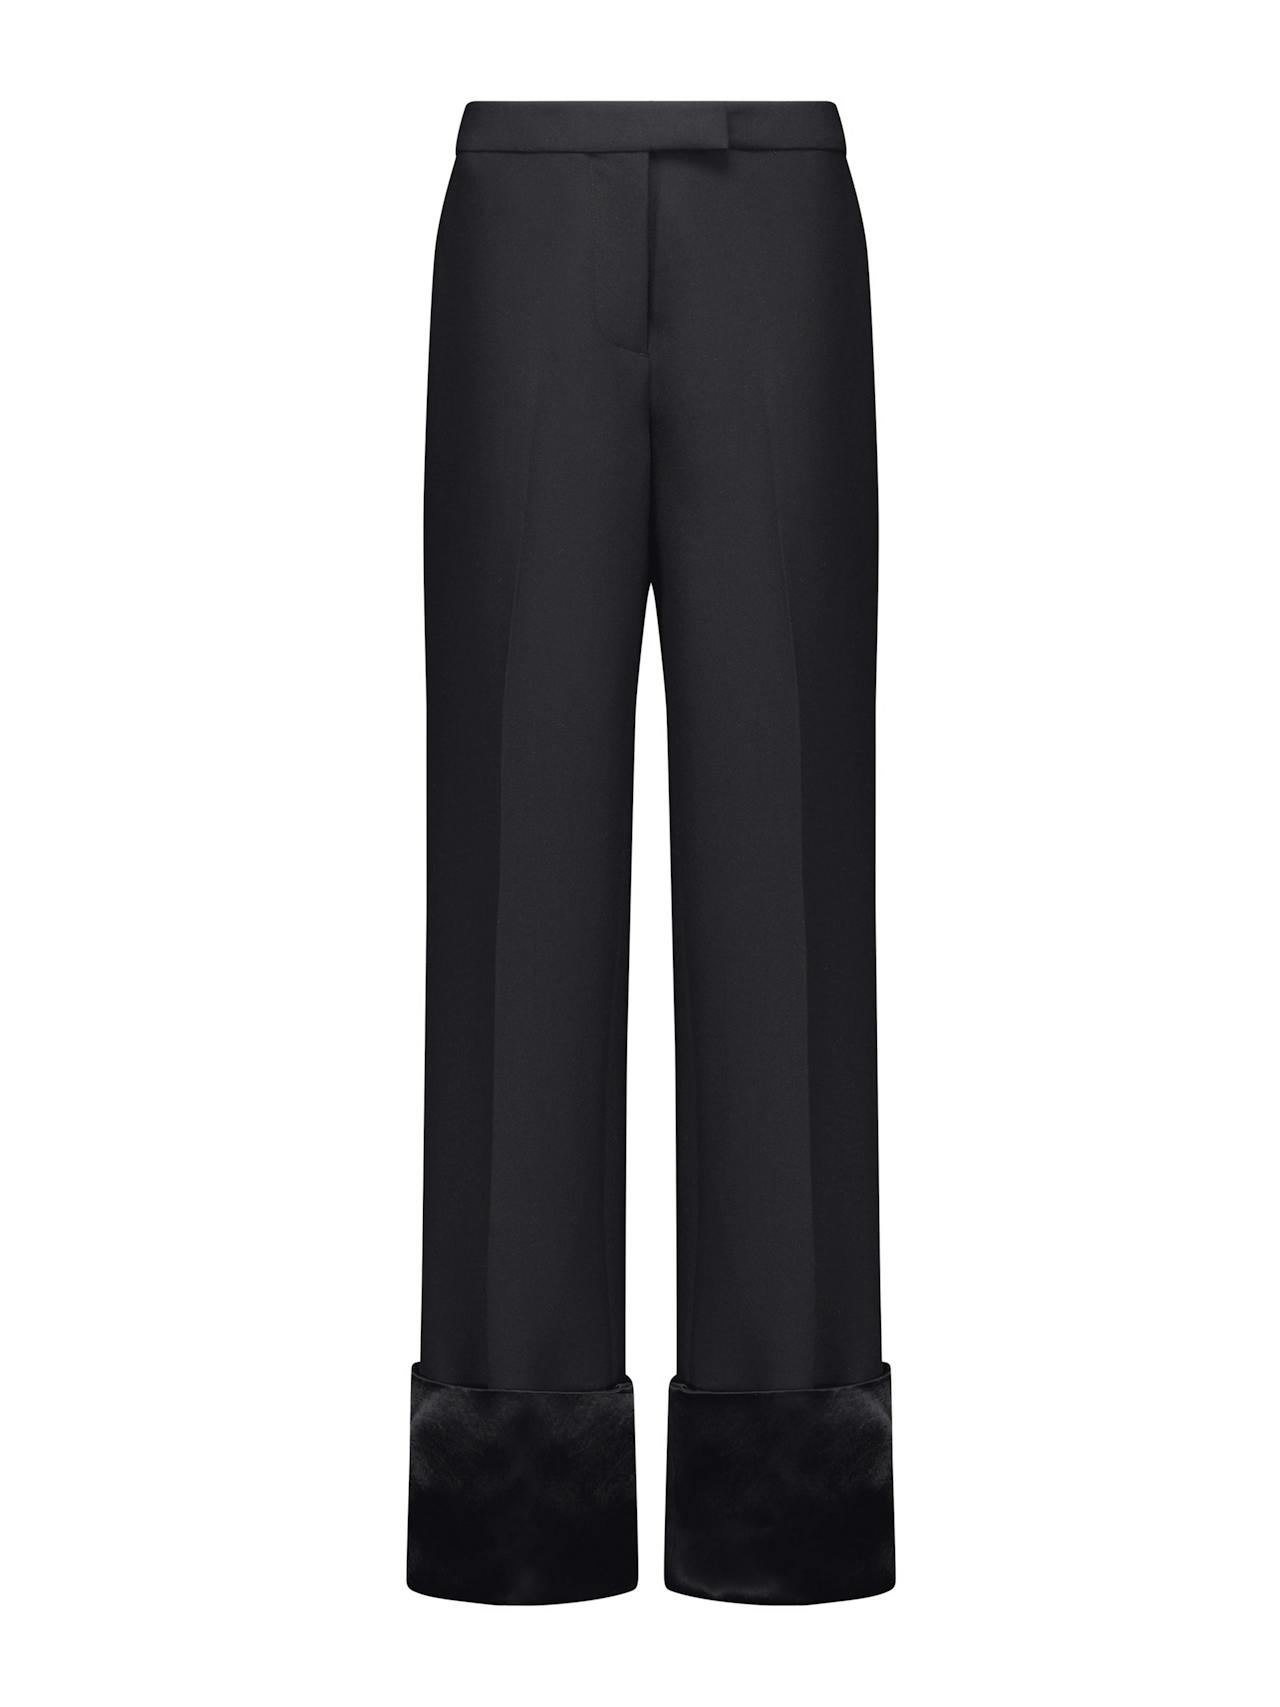 Black straight cuff trouser